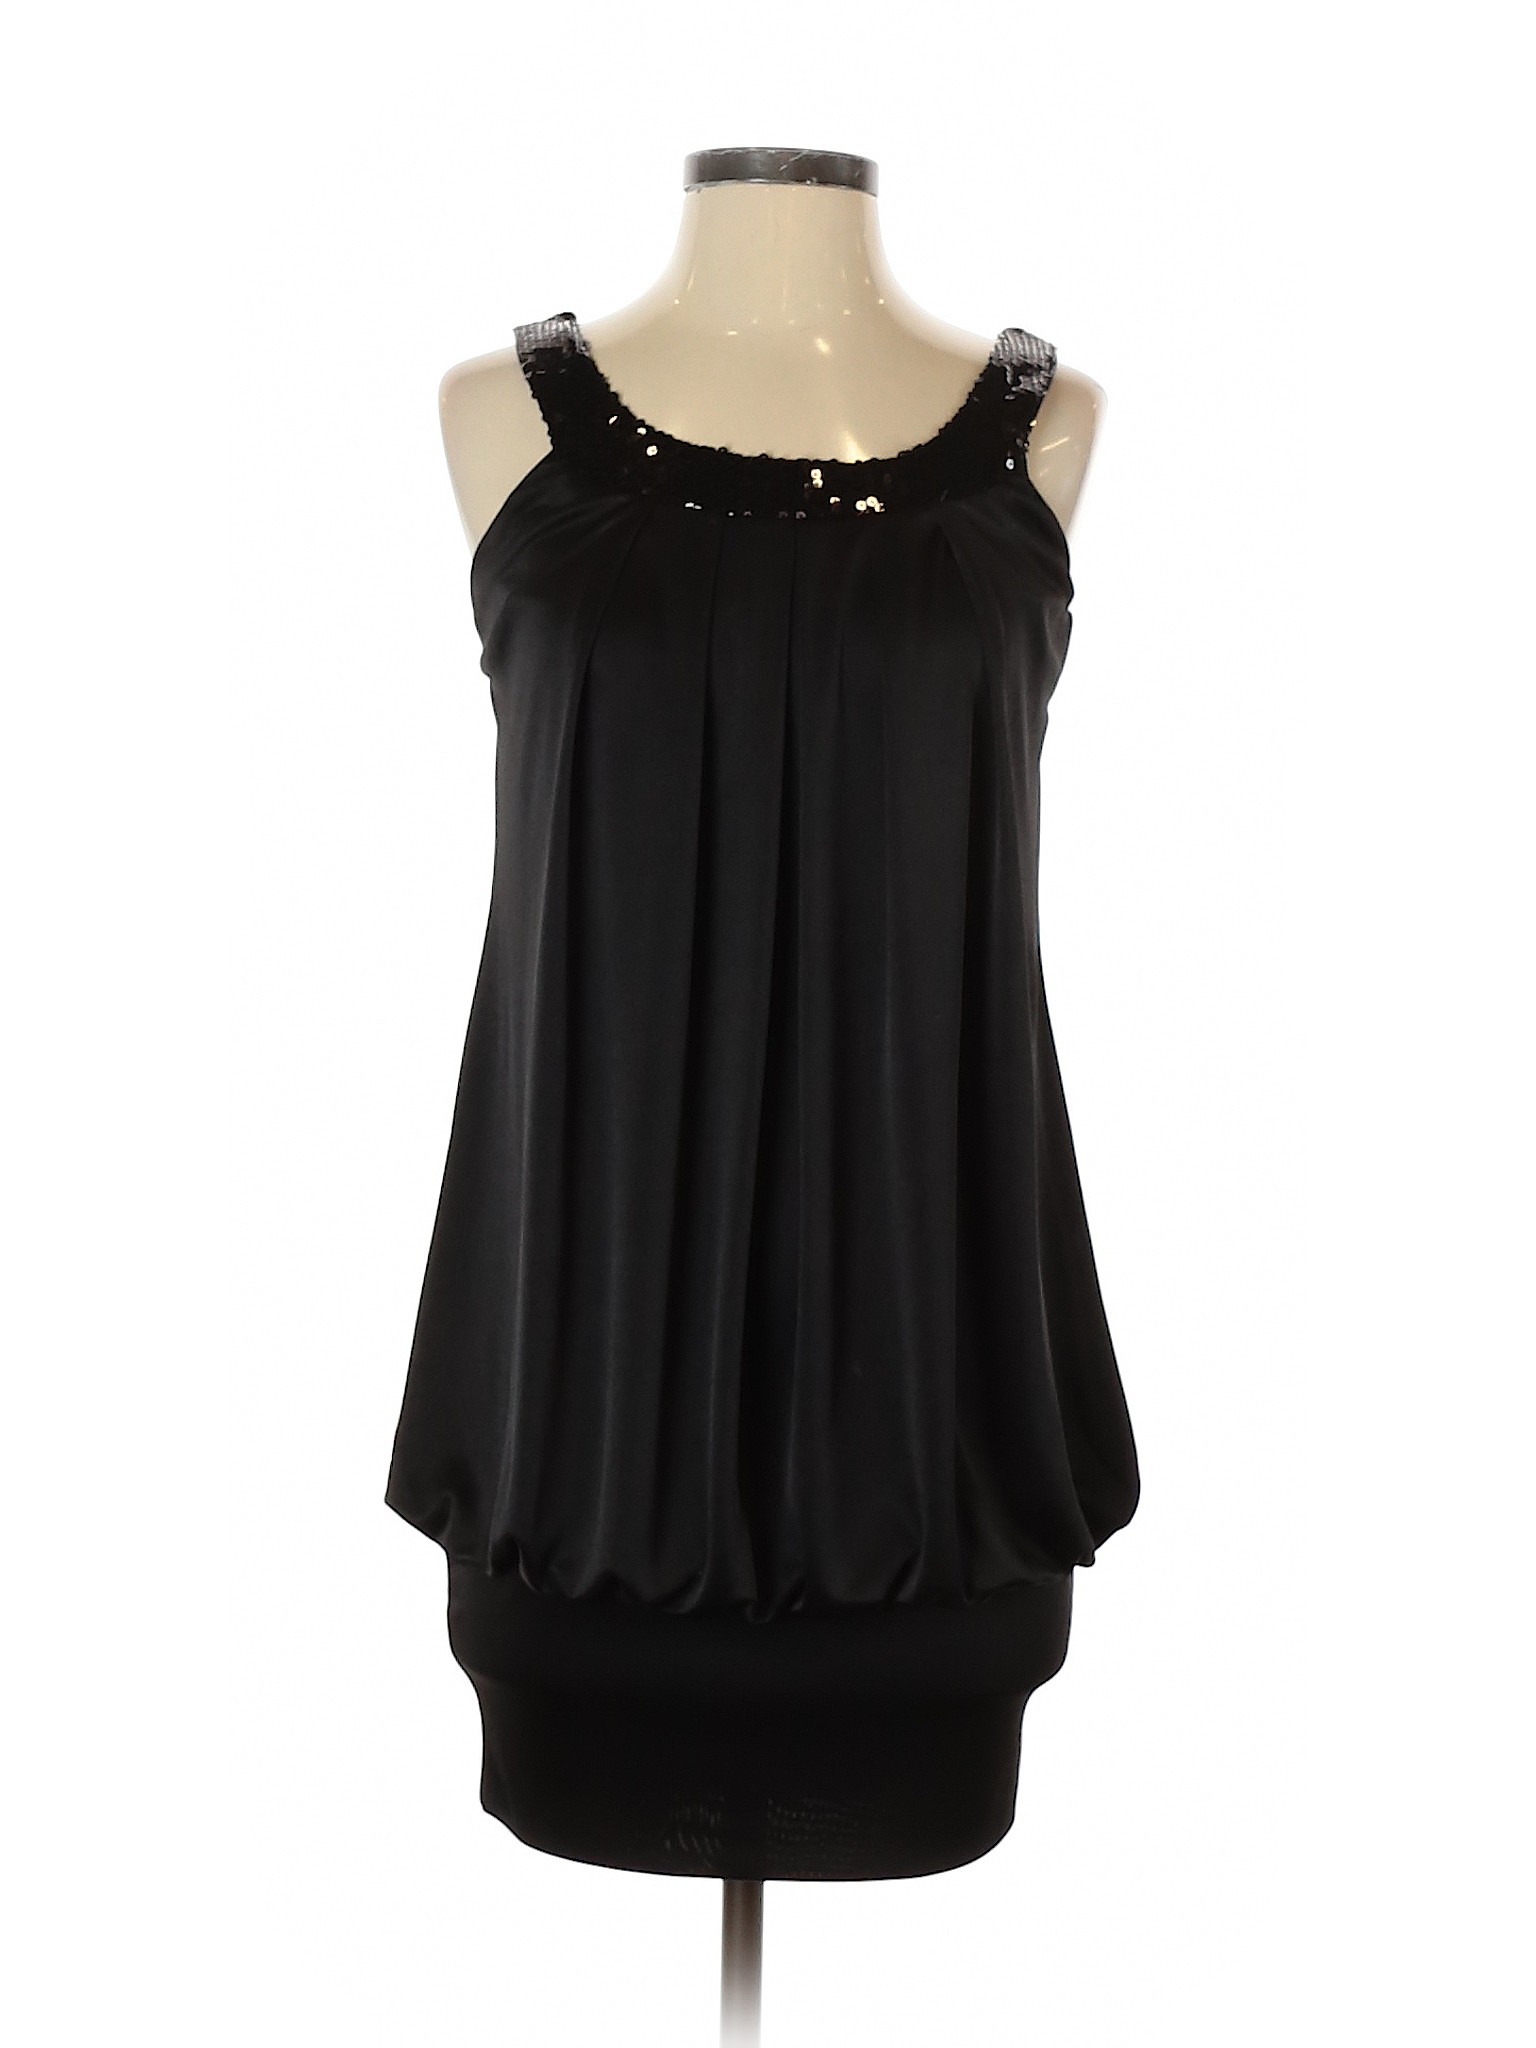 Ally B Women Black Cocktail Dress S | eBay